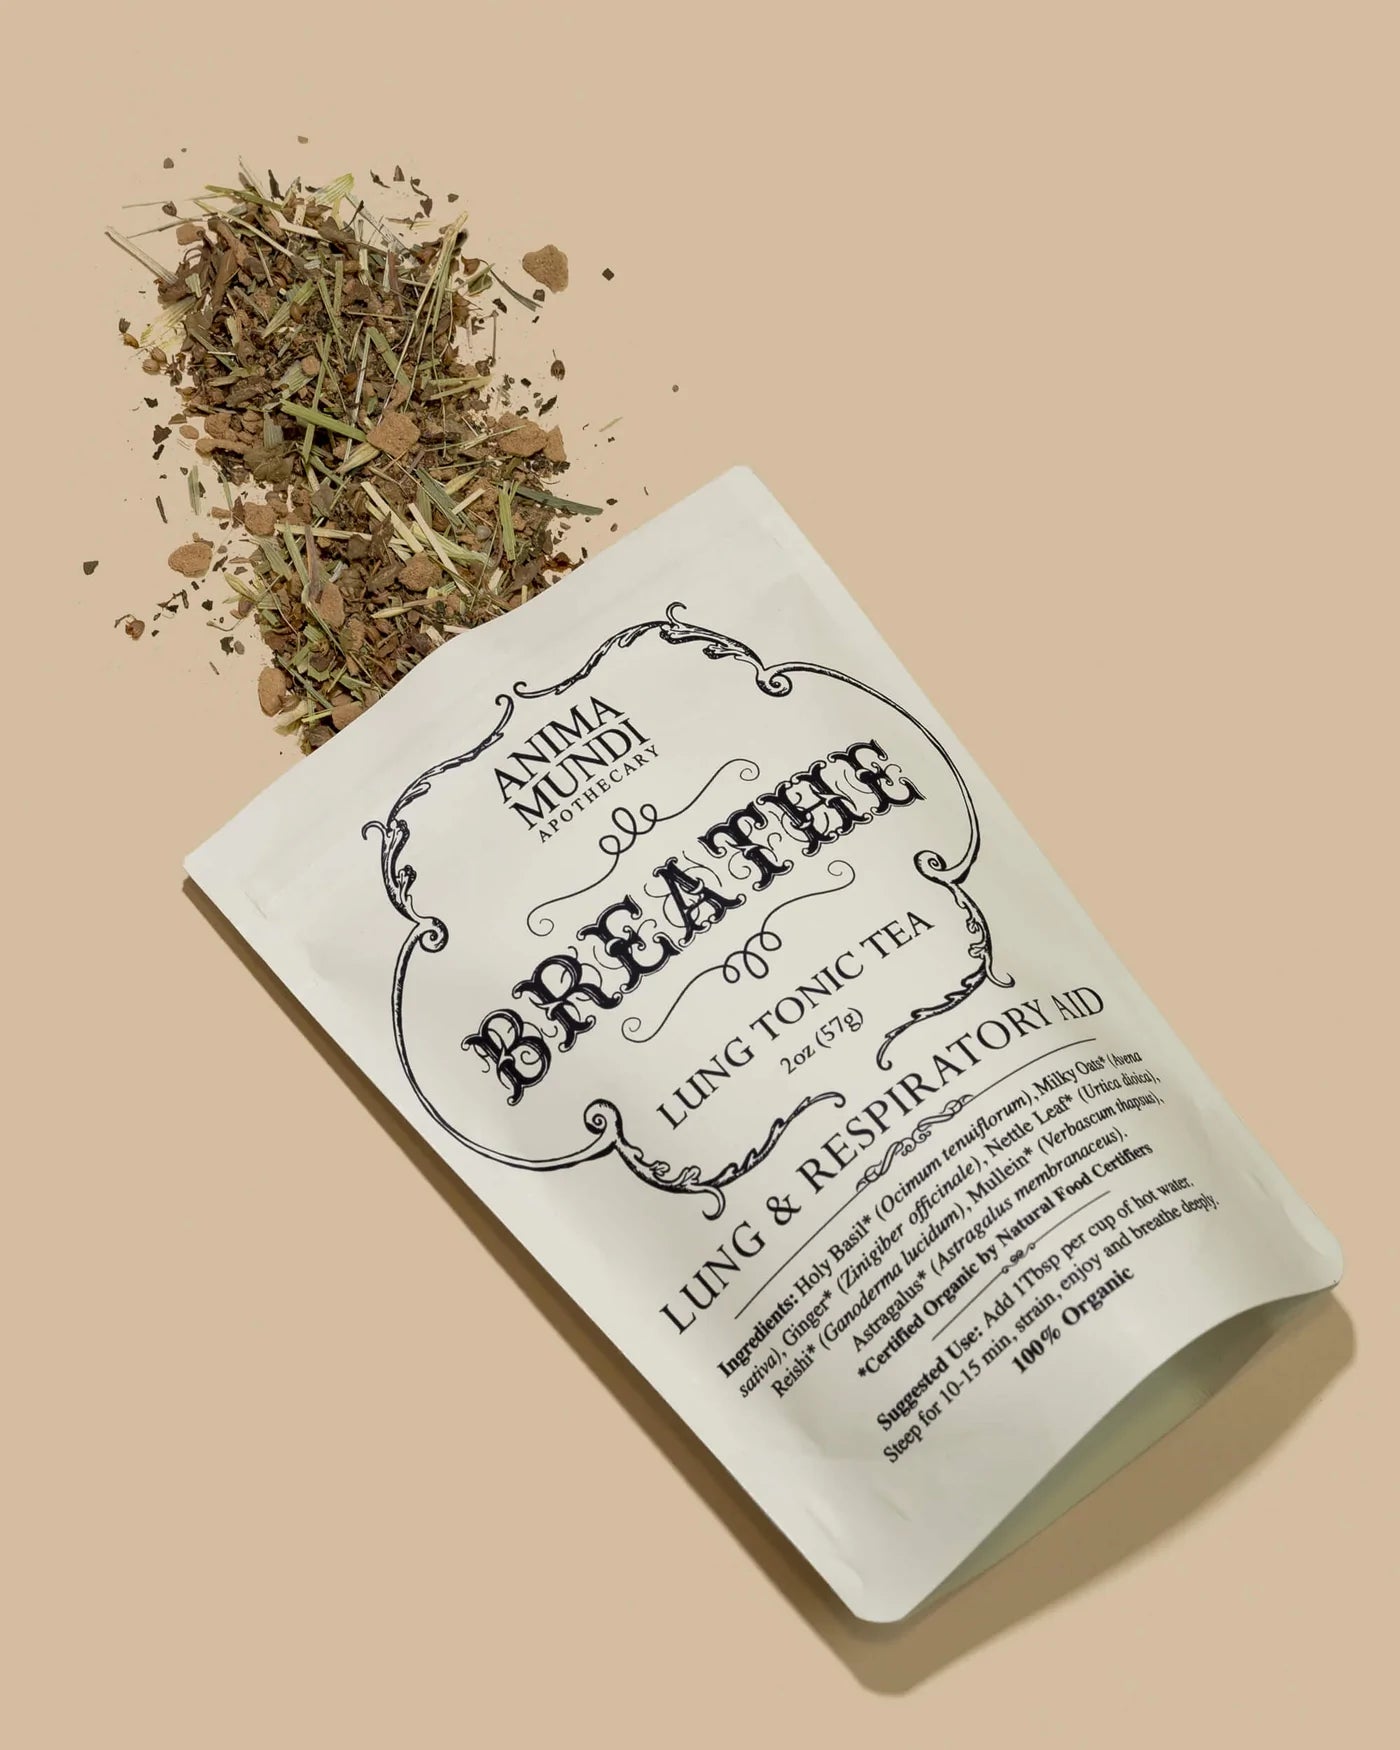 Anima Mundi Breathe: Lung Tonic Tea 57 Grams